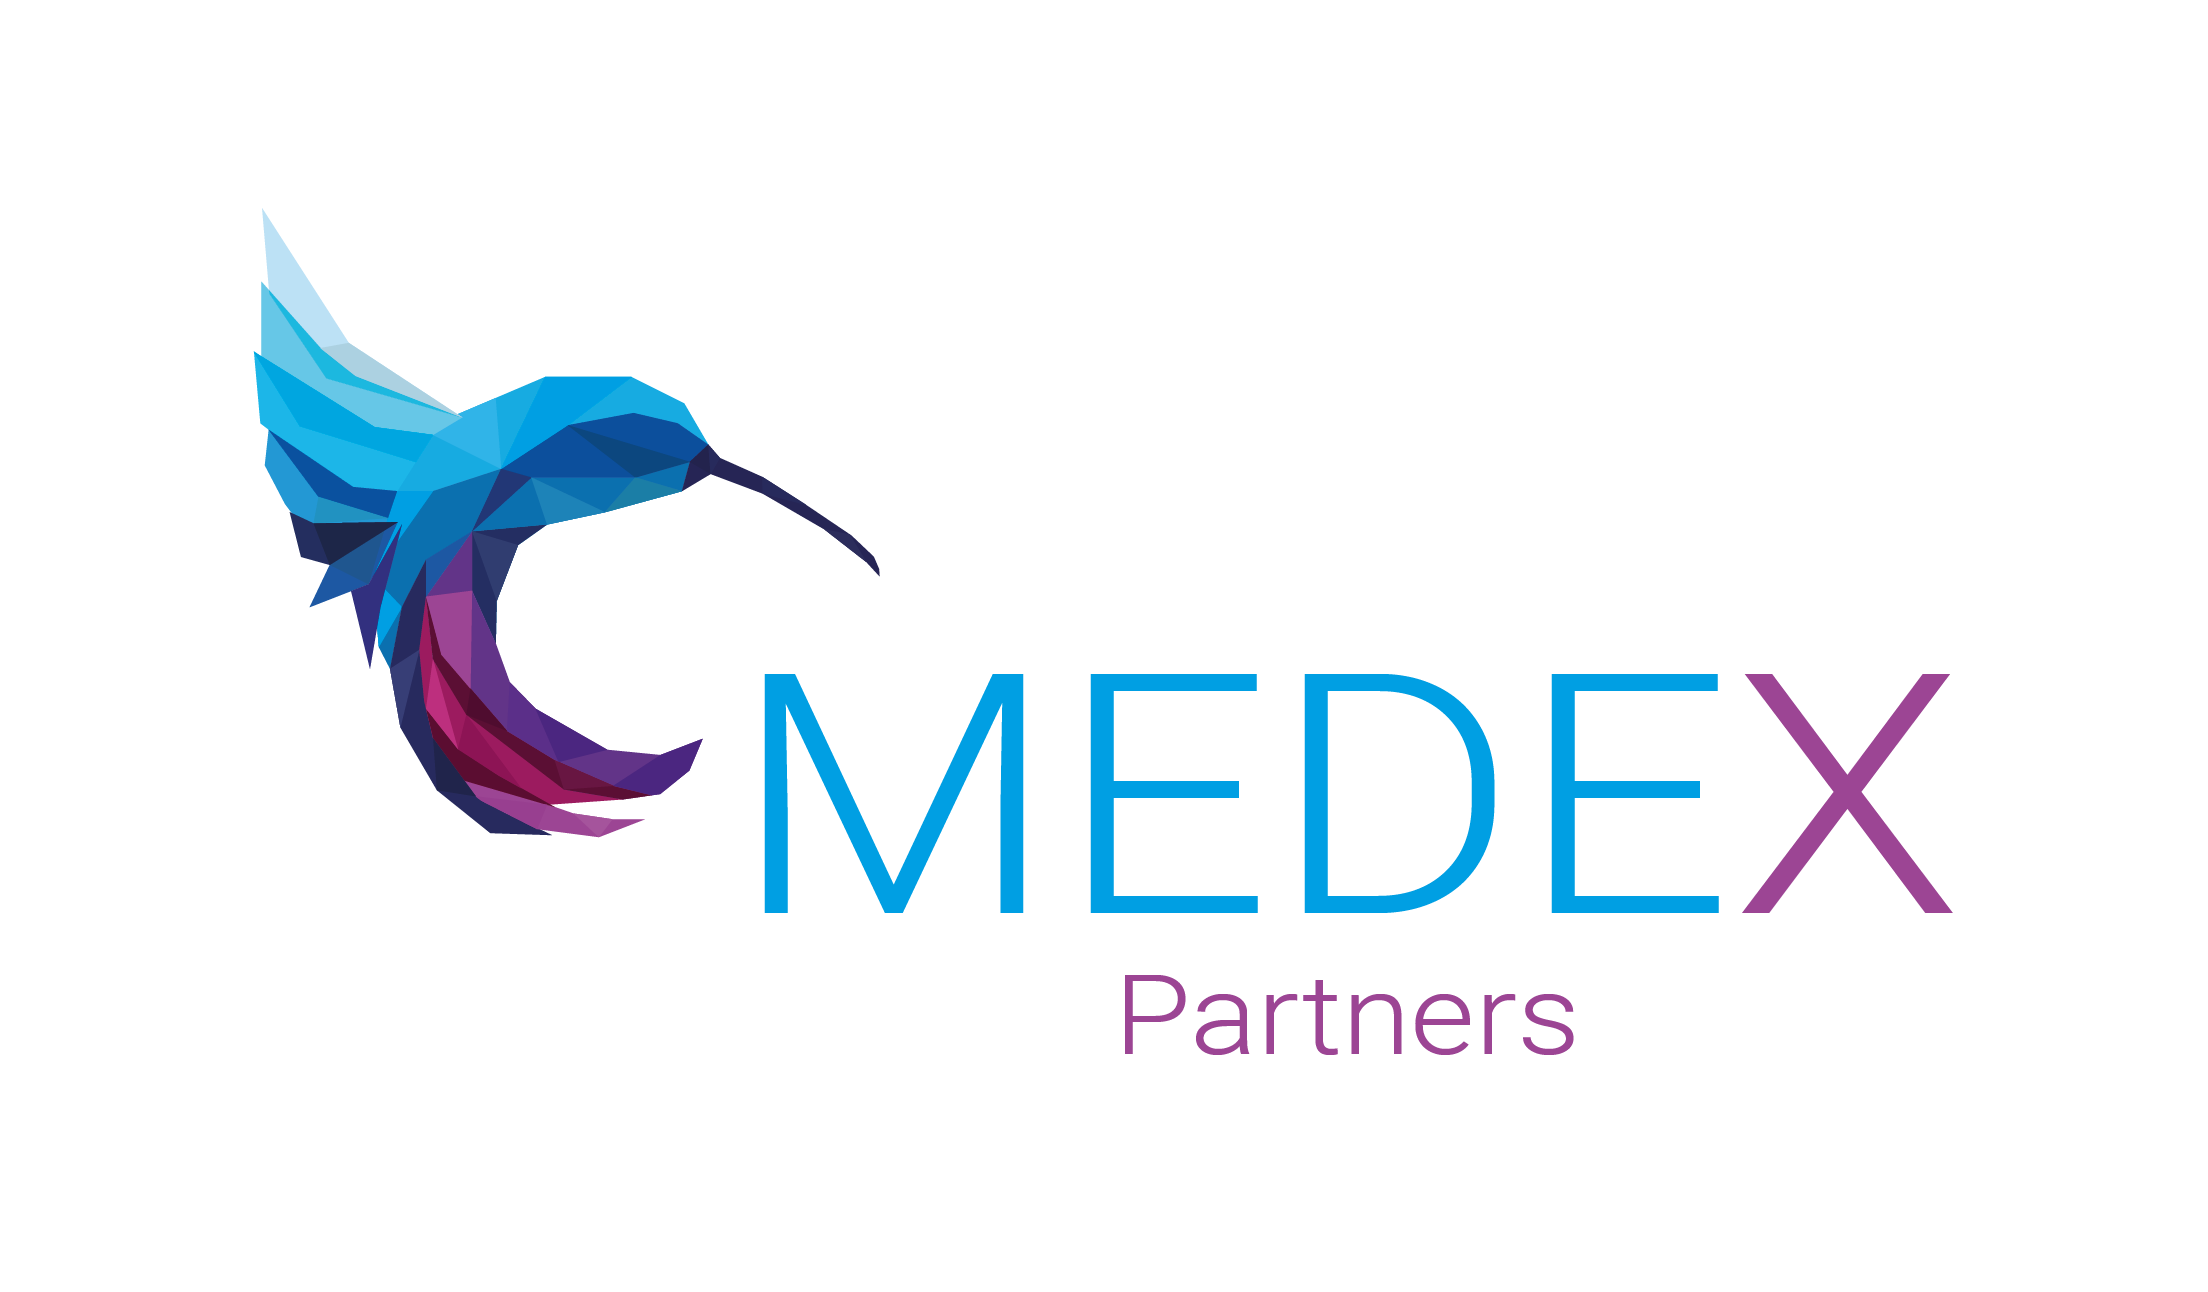 Medex Partners